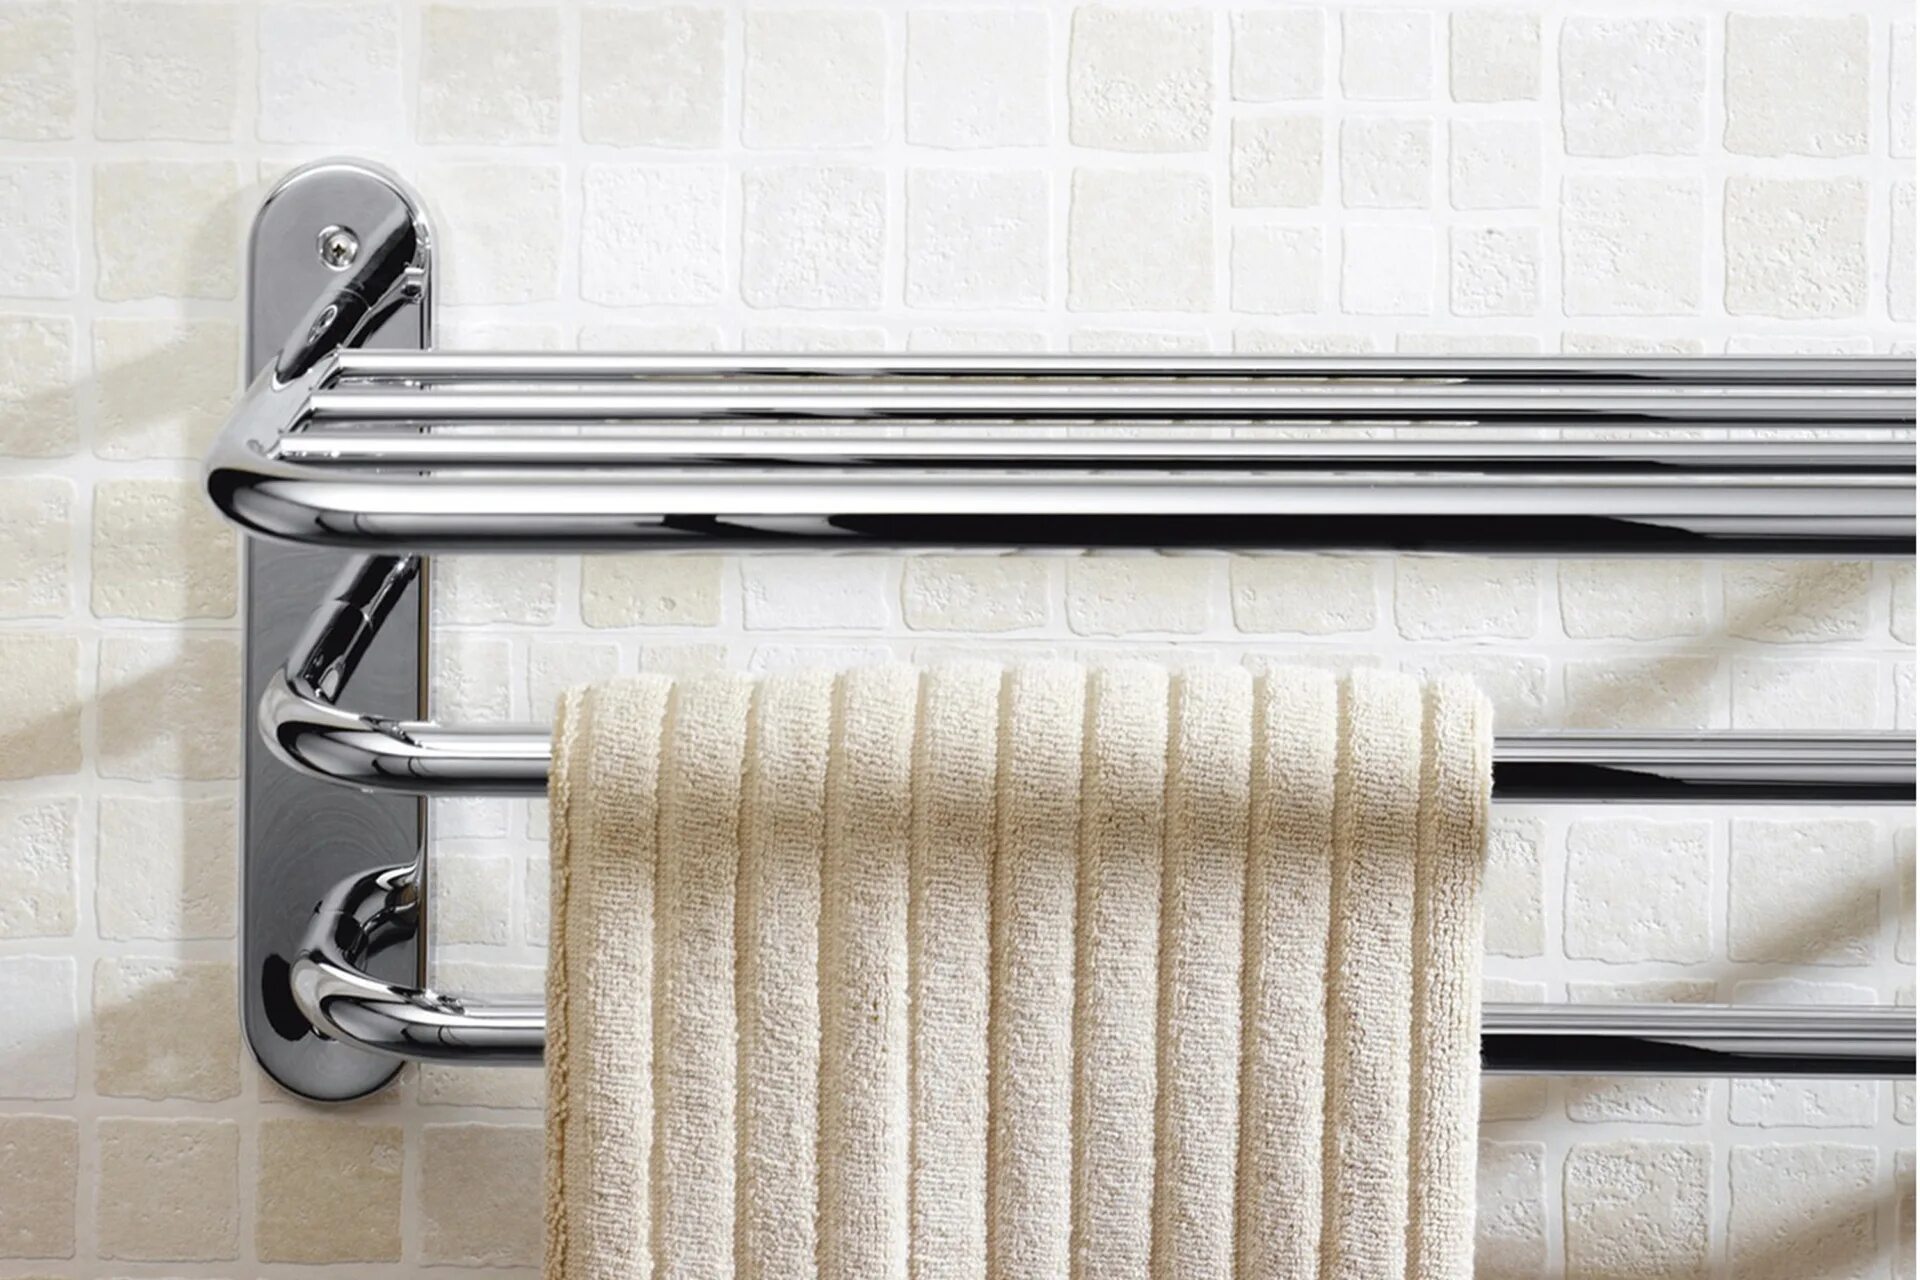 YLT 0313а сушилка Towel Rack. Сушилка для белья Stainless Steel Towel Rack. Полотенце сушилка для ванны. Держатель для полотенец в ванну. Сушилка для полотенец настенная